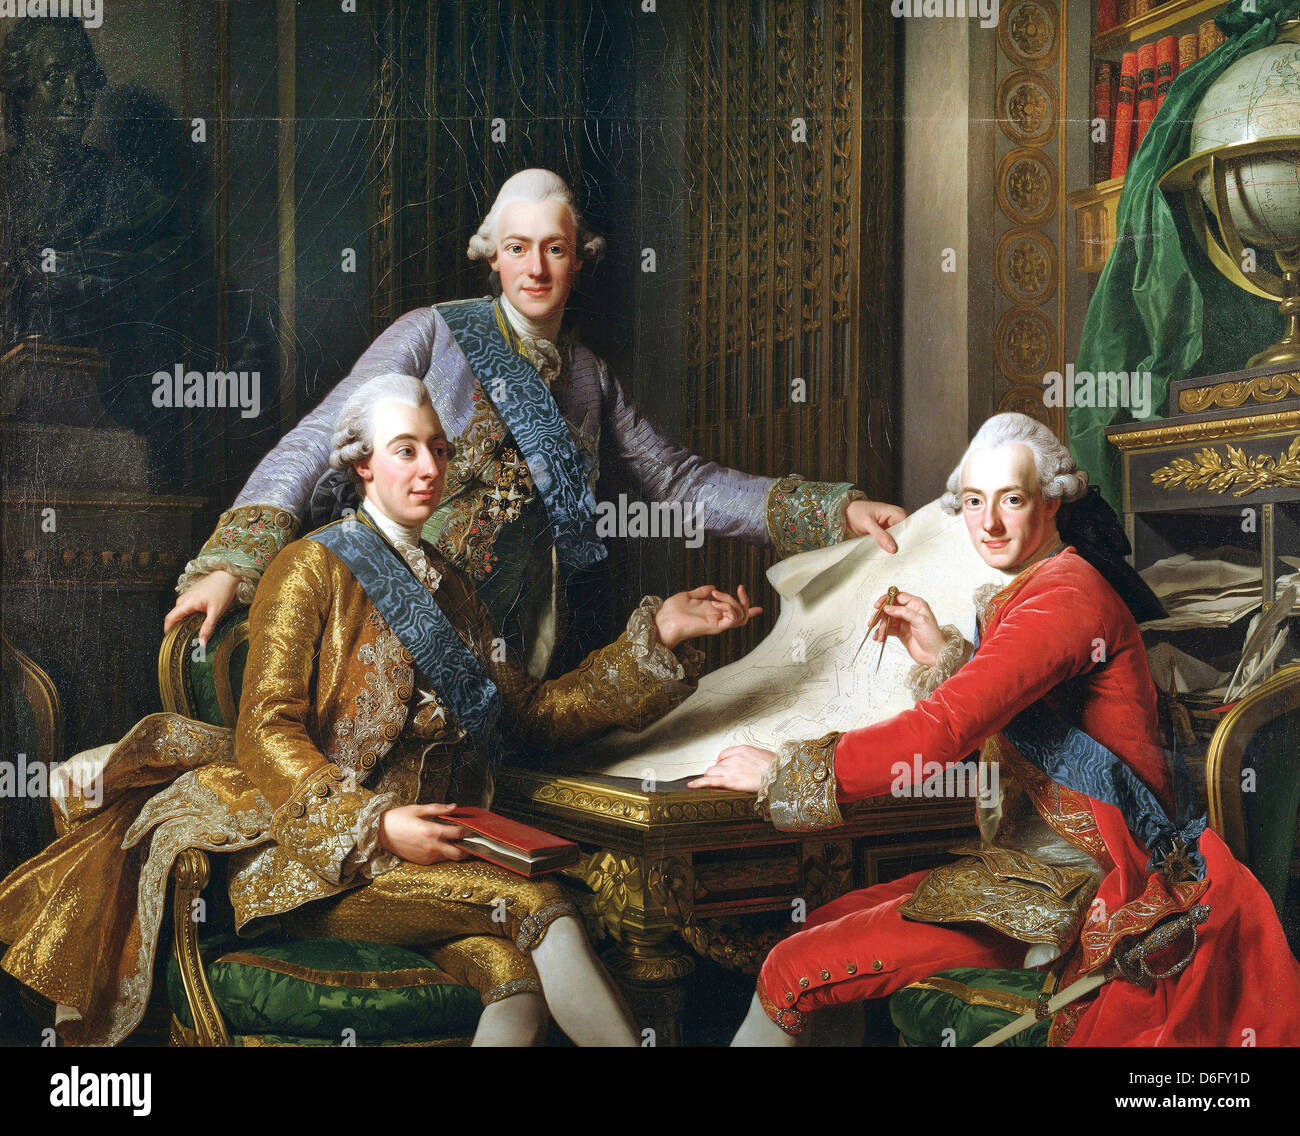 Alexander Roslin, Re Gustavo III di Svezia e i suoi fratelli 1771 olio su tela. Nationalmuseum, Stoccolma, Svezia Foto Stock